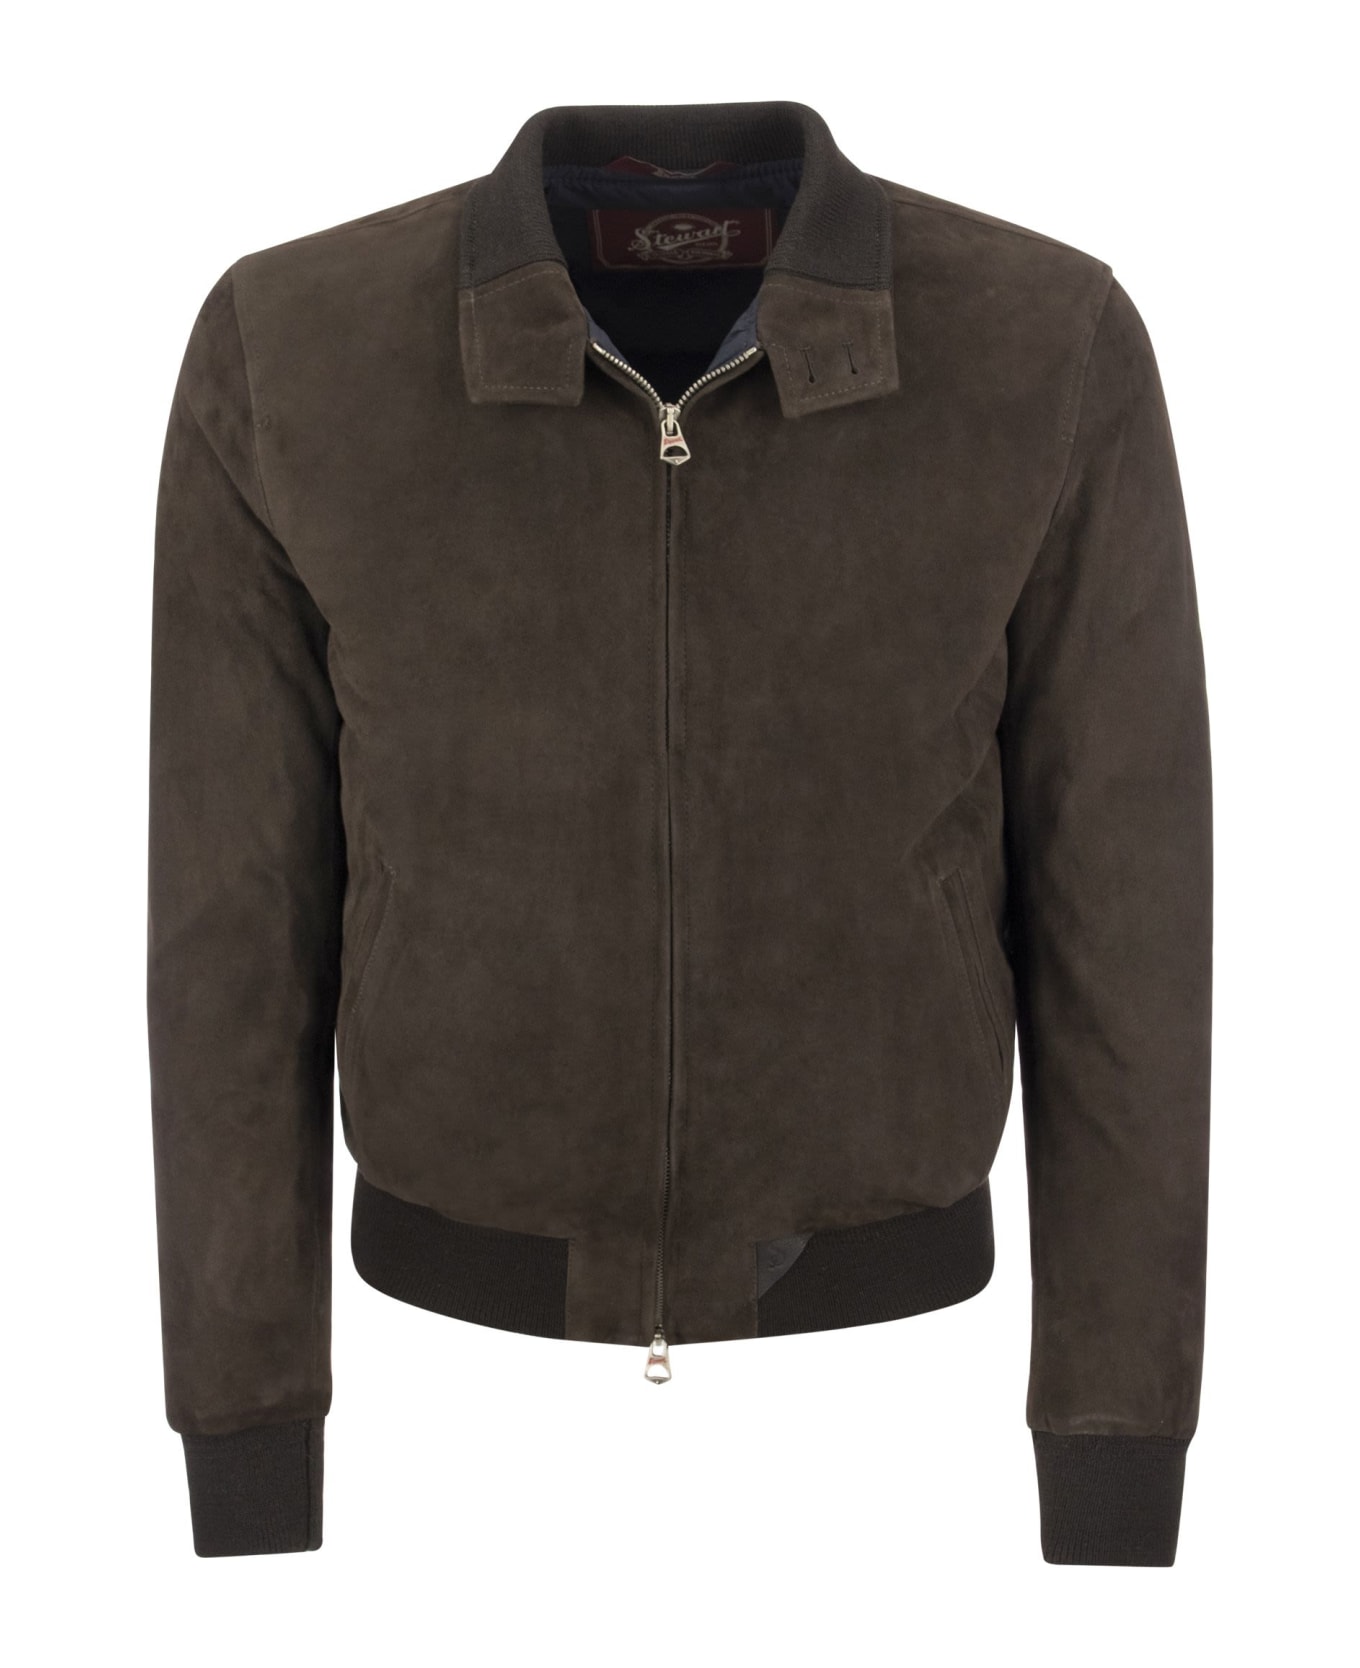 Stewart Suede Leather Jacket - Brown